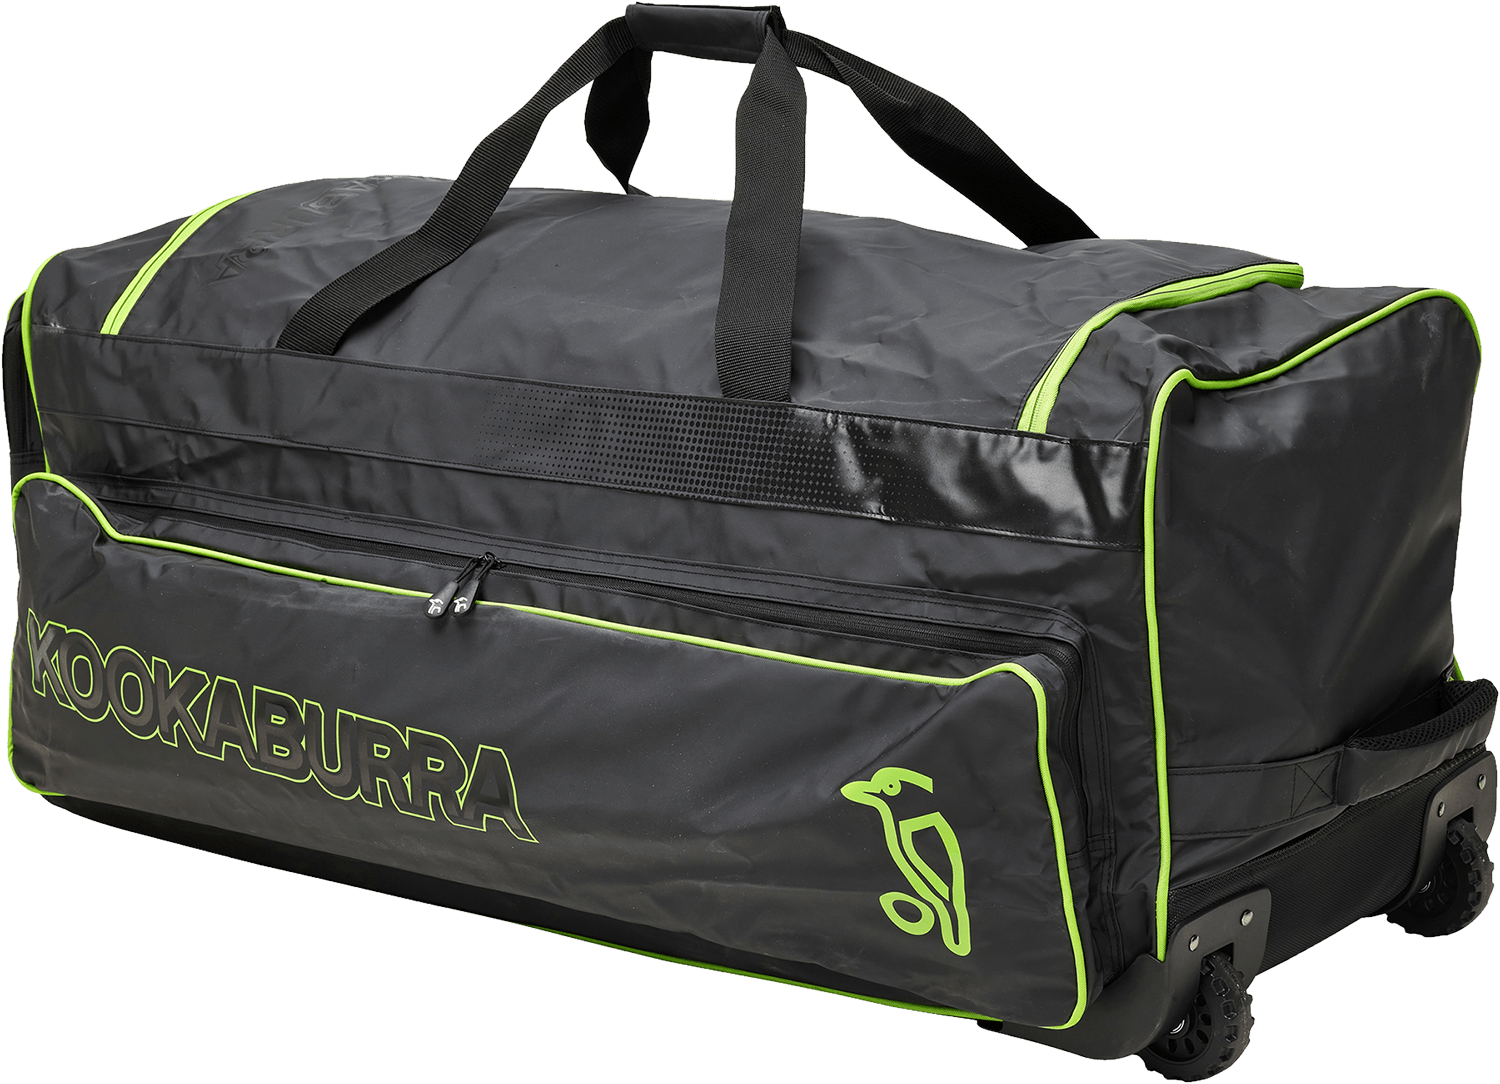 Kookaburra Cricket Bags Kookaburra Players Tour Wheelie Cricket Kit Bag